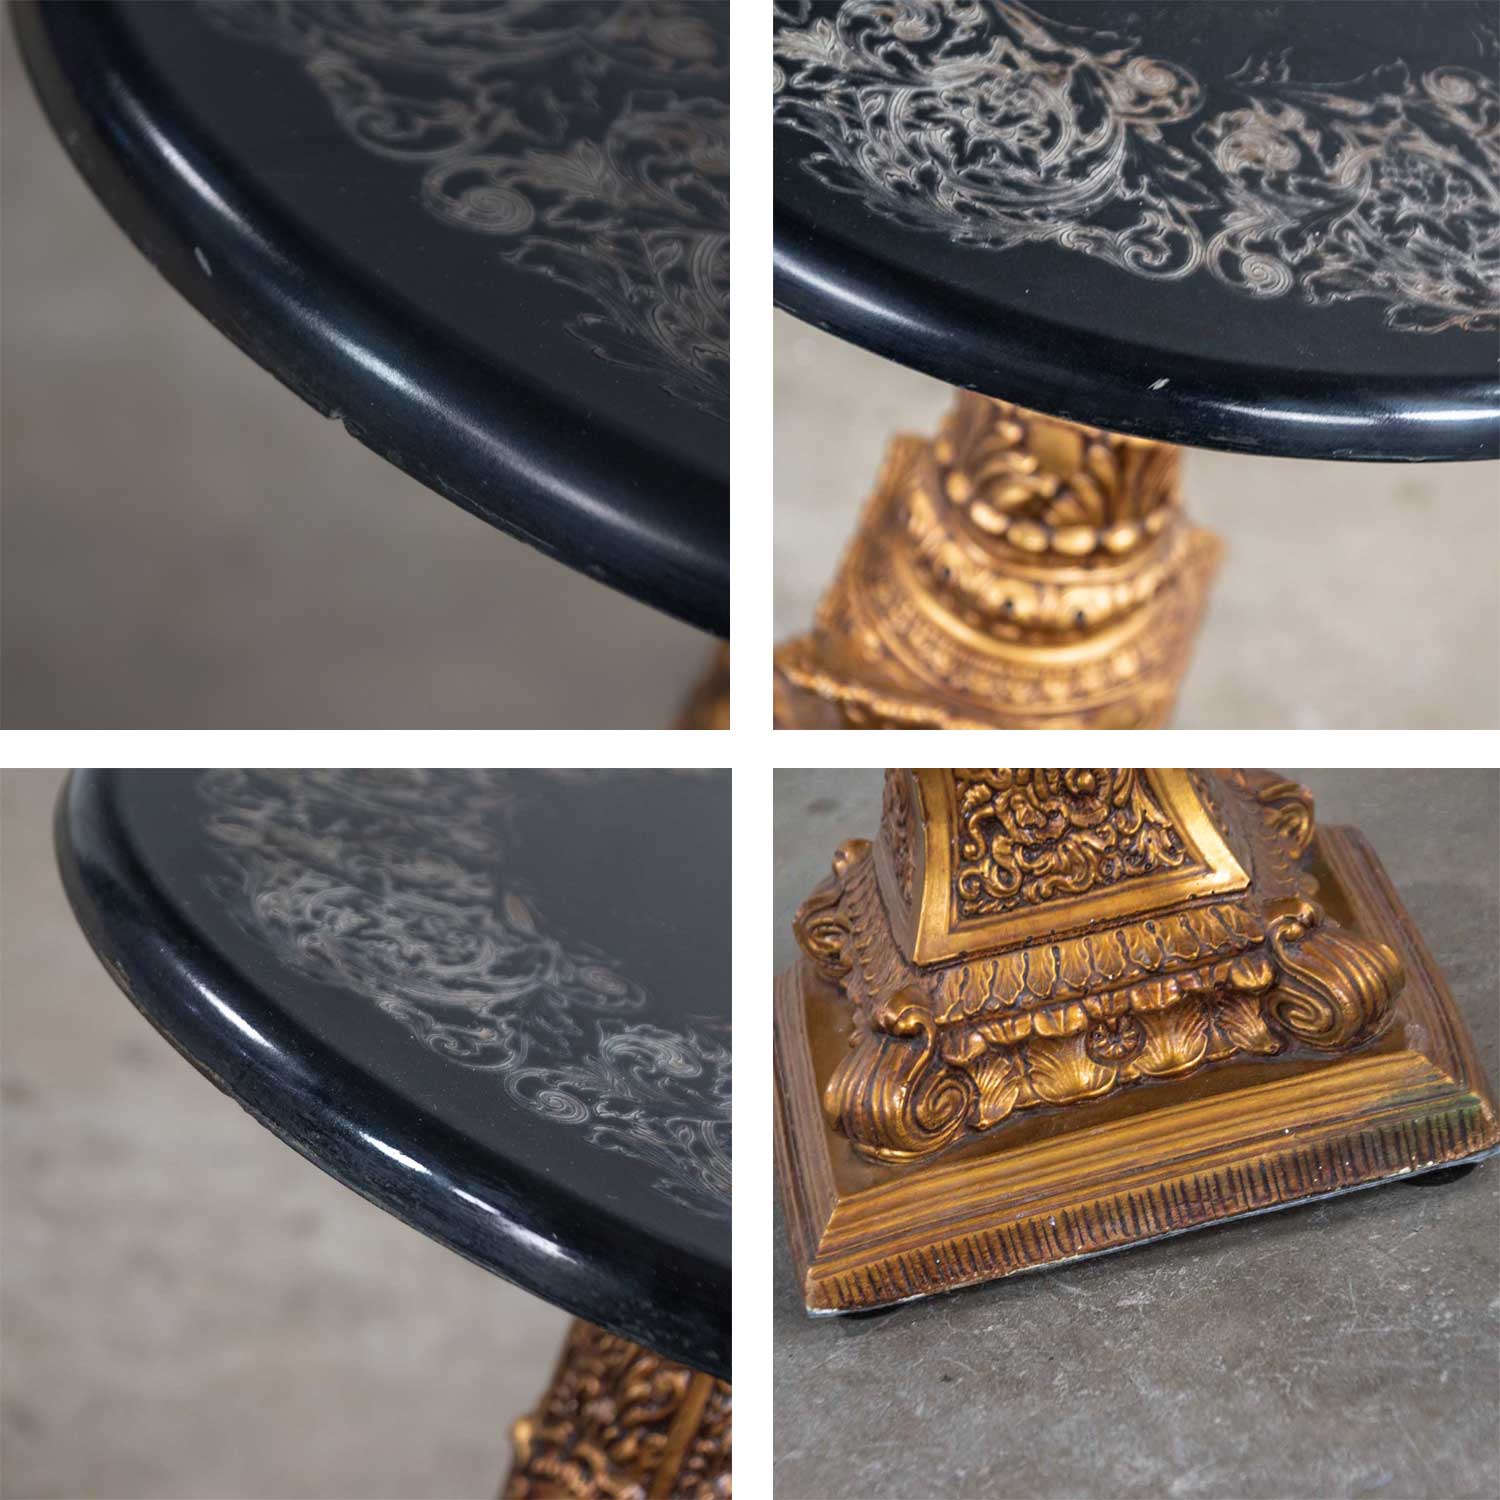 Neoclassic Hollywood Regency Gilded Plaster Round Pedestal Side Table & Black Top